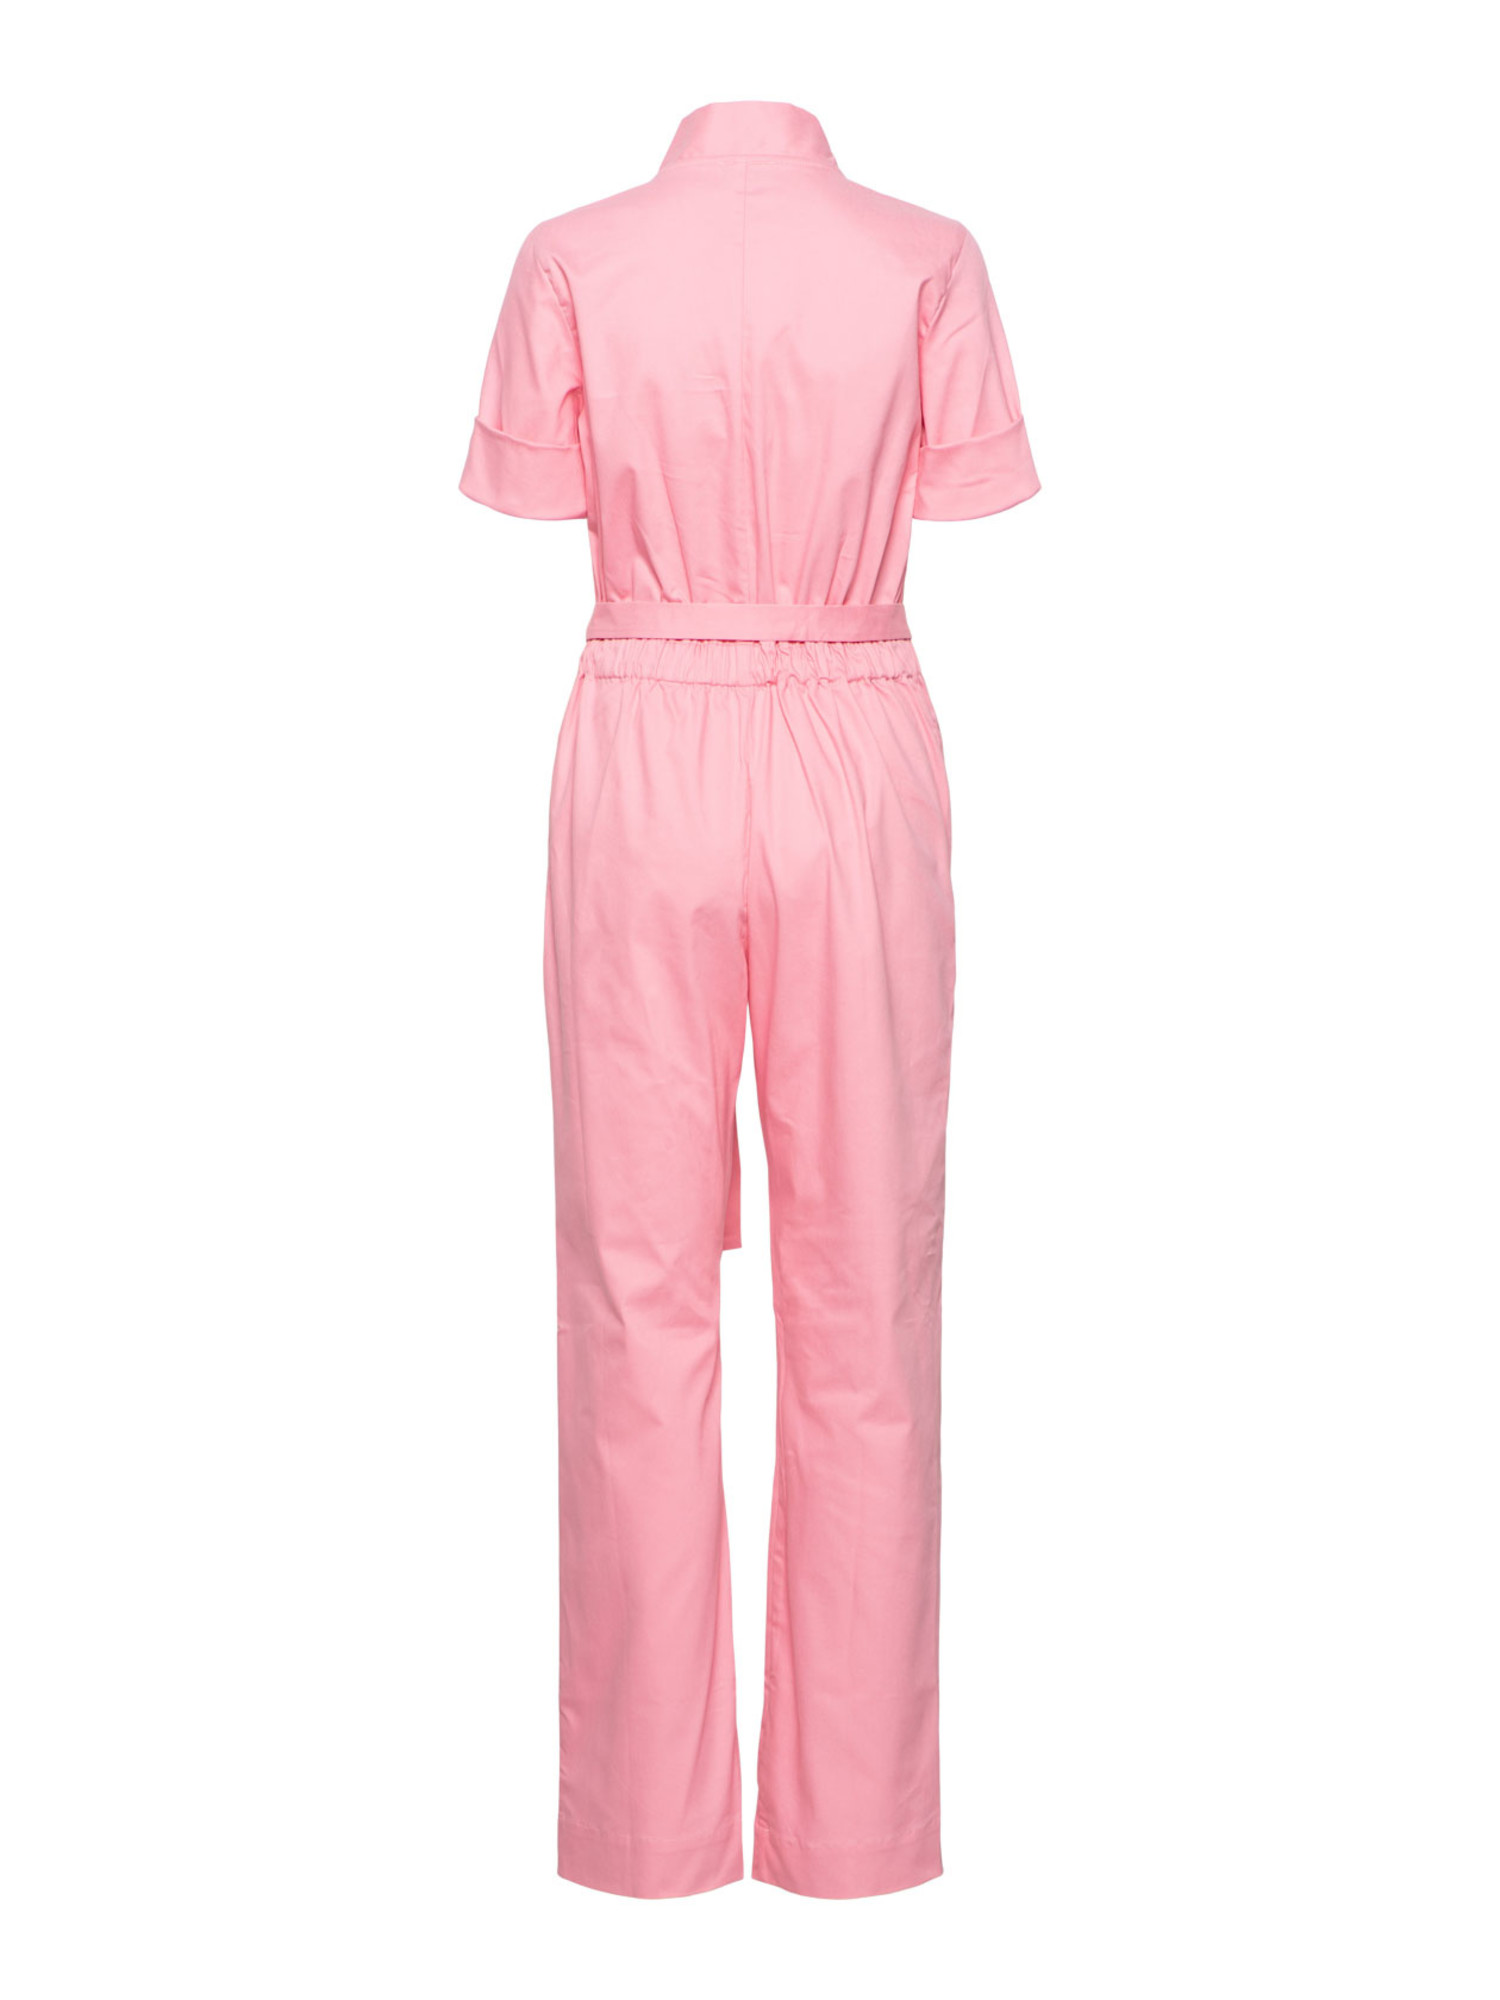 Murray pantsuit - pink - Dutchess - Shop